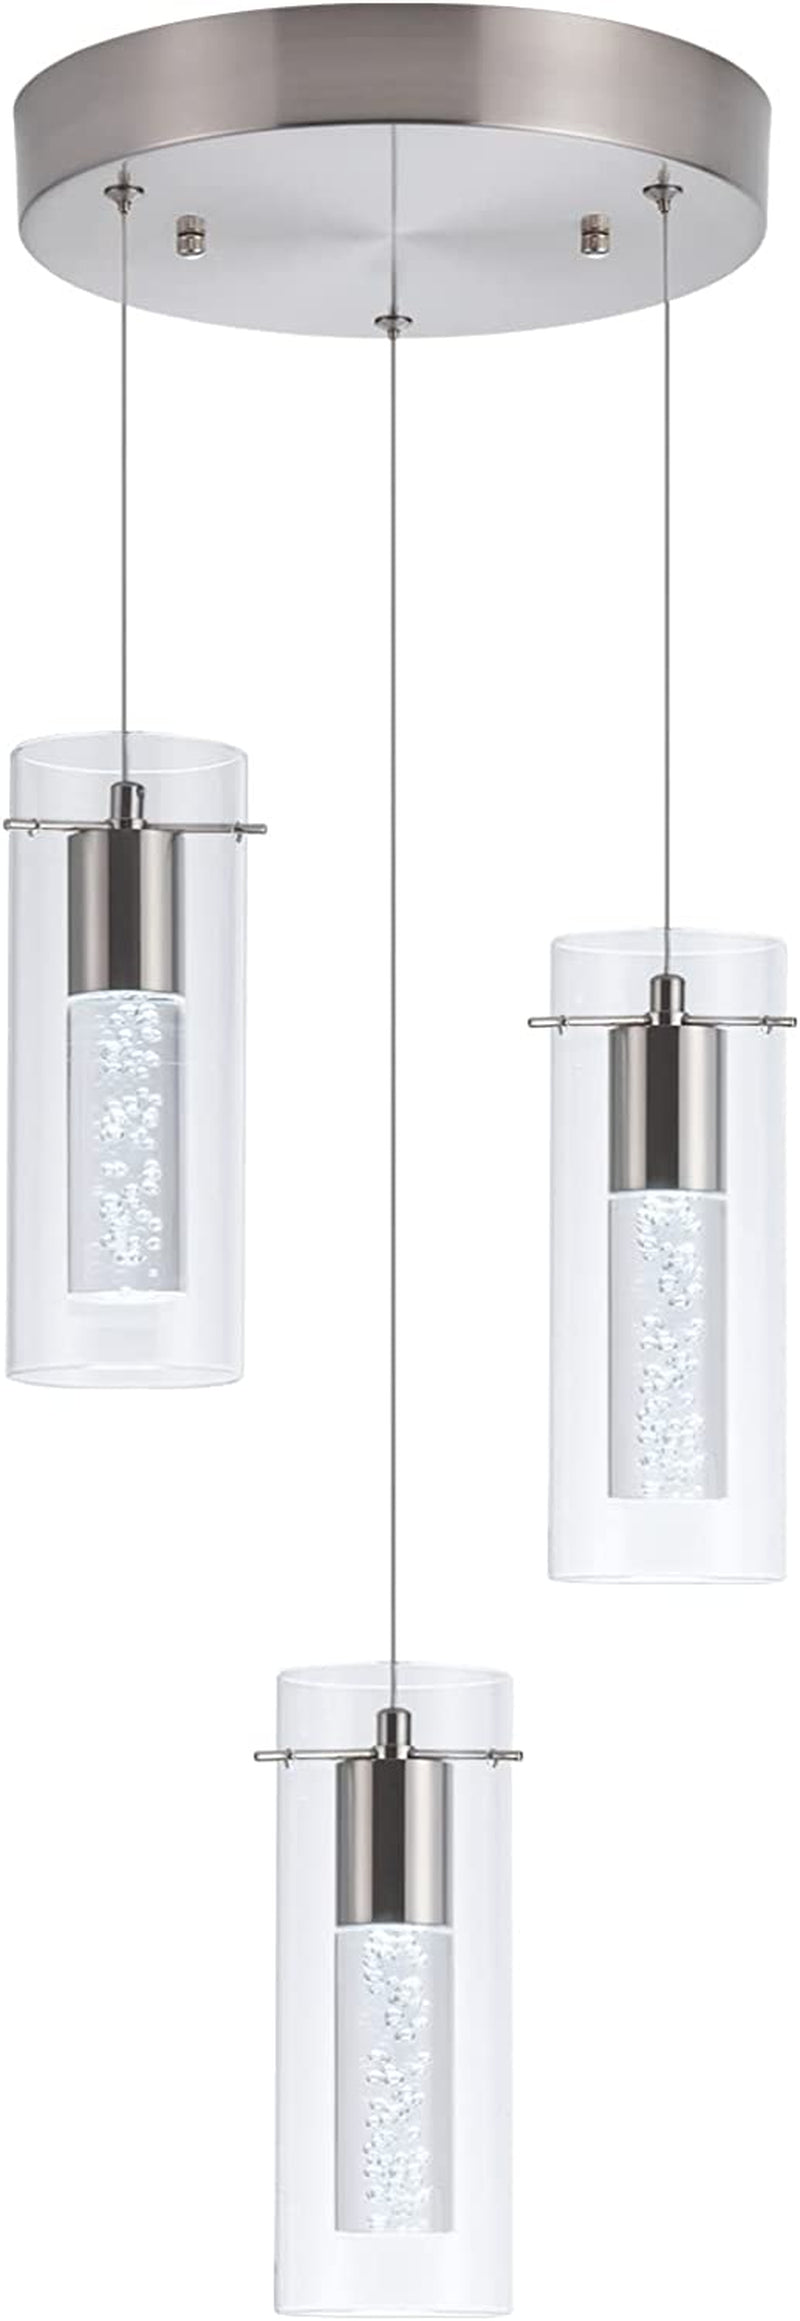 Leadtek Pendant Lights,5-Light Integrated Kitchen Light, 40W CRI 80+, 3400Lm Premium Screwed Bubble with Brushed Nickel Finish. Home & Garden > Lighting > Lighting Fixtures Leadtek 3-Light  